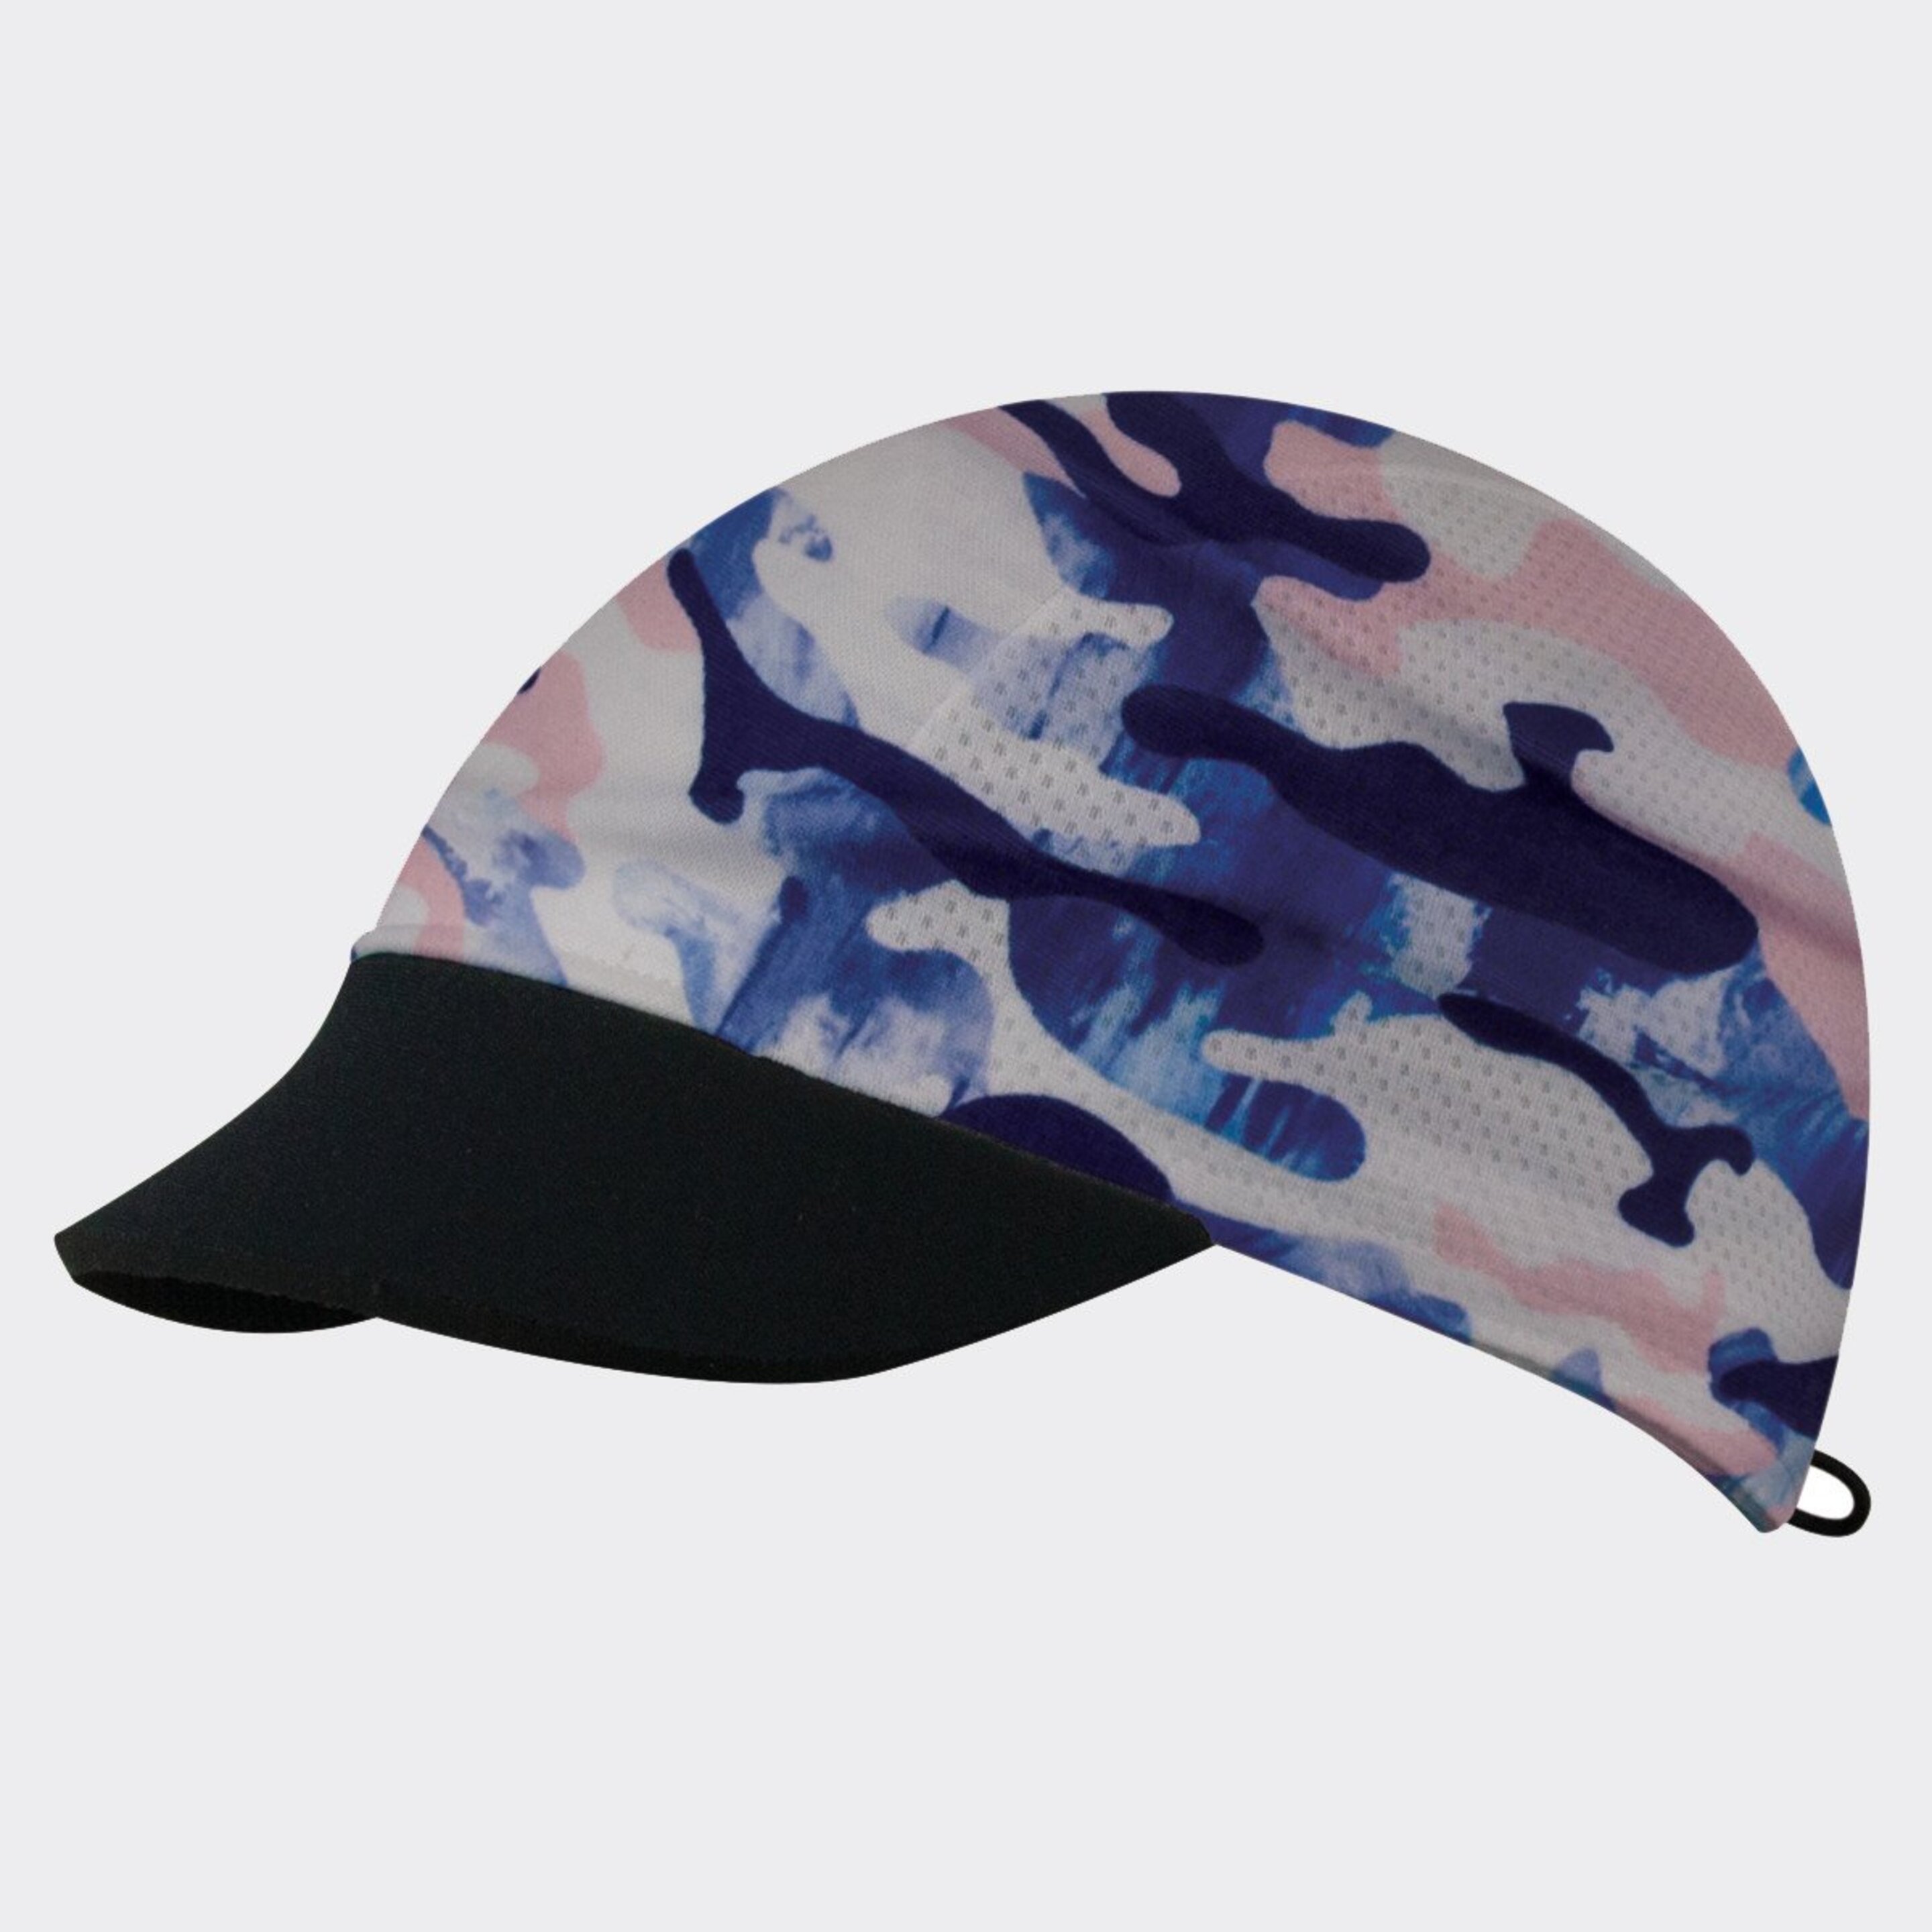 Gorra Coolcap Cool Camuflage - multicolor - 